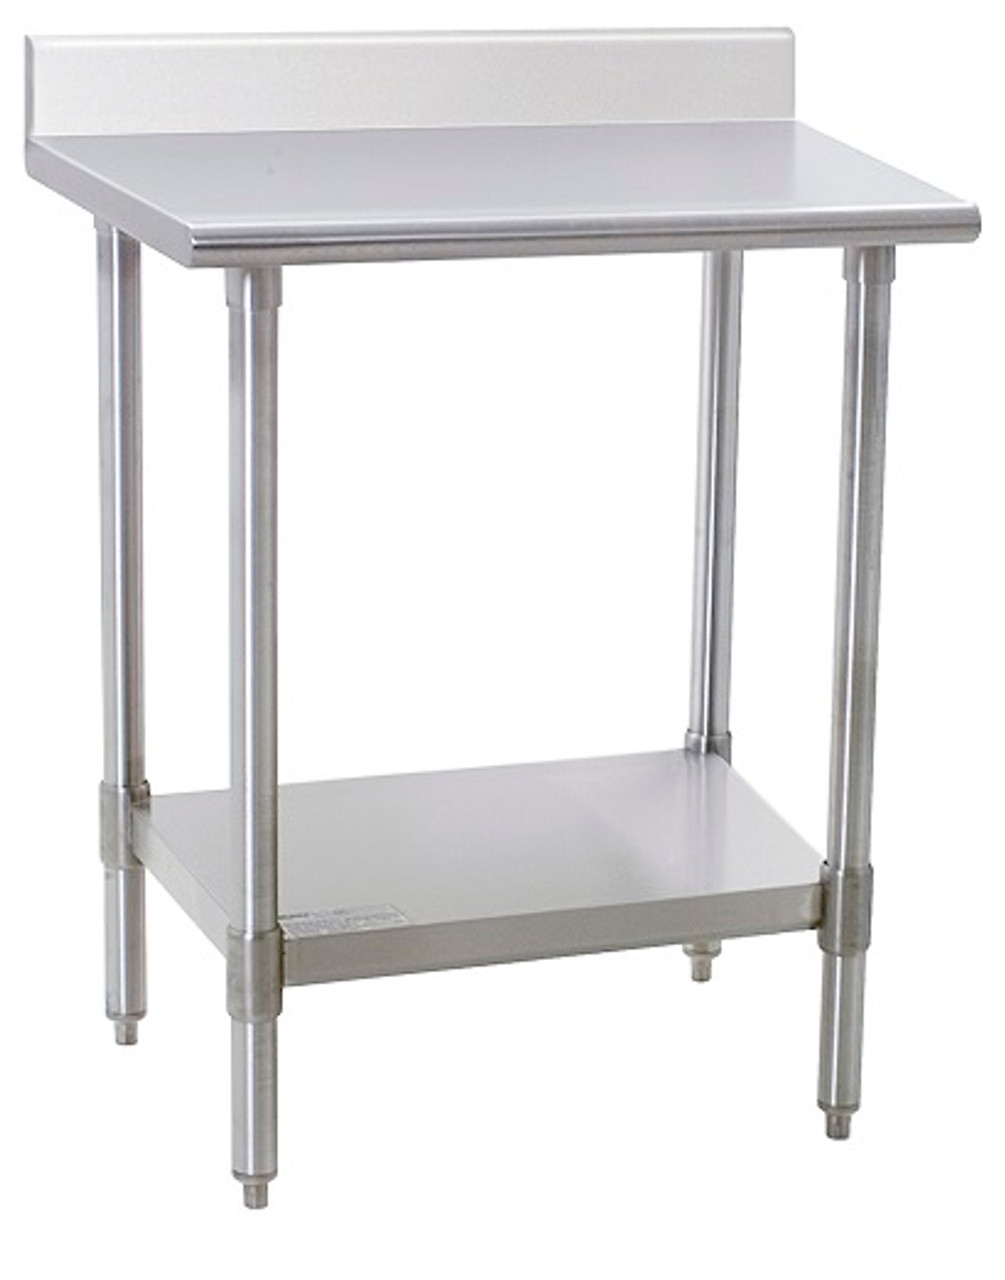 Stainless Steel Work Table Eagle Deluxe 16 304 Ss Top W Backsplash Ss Base Shelf Nsf 36 W X 48 L X 35 H Ea T3648seb Bs Cleanroom World